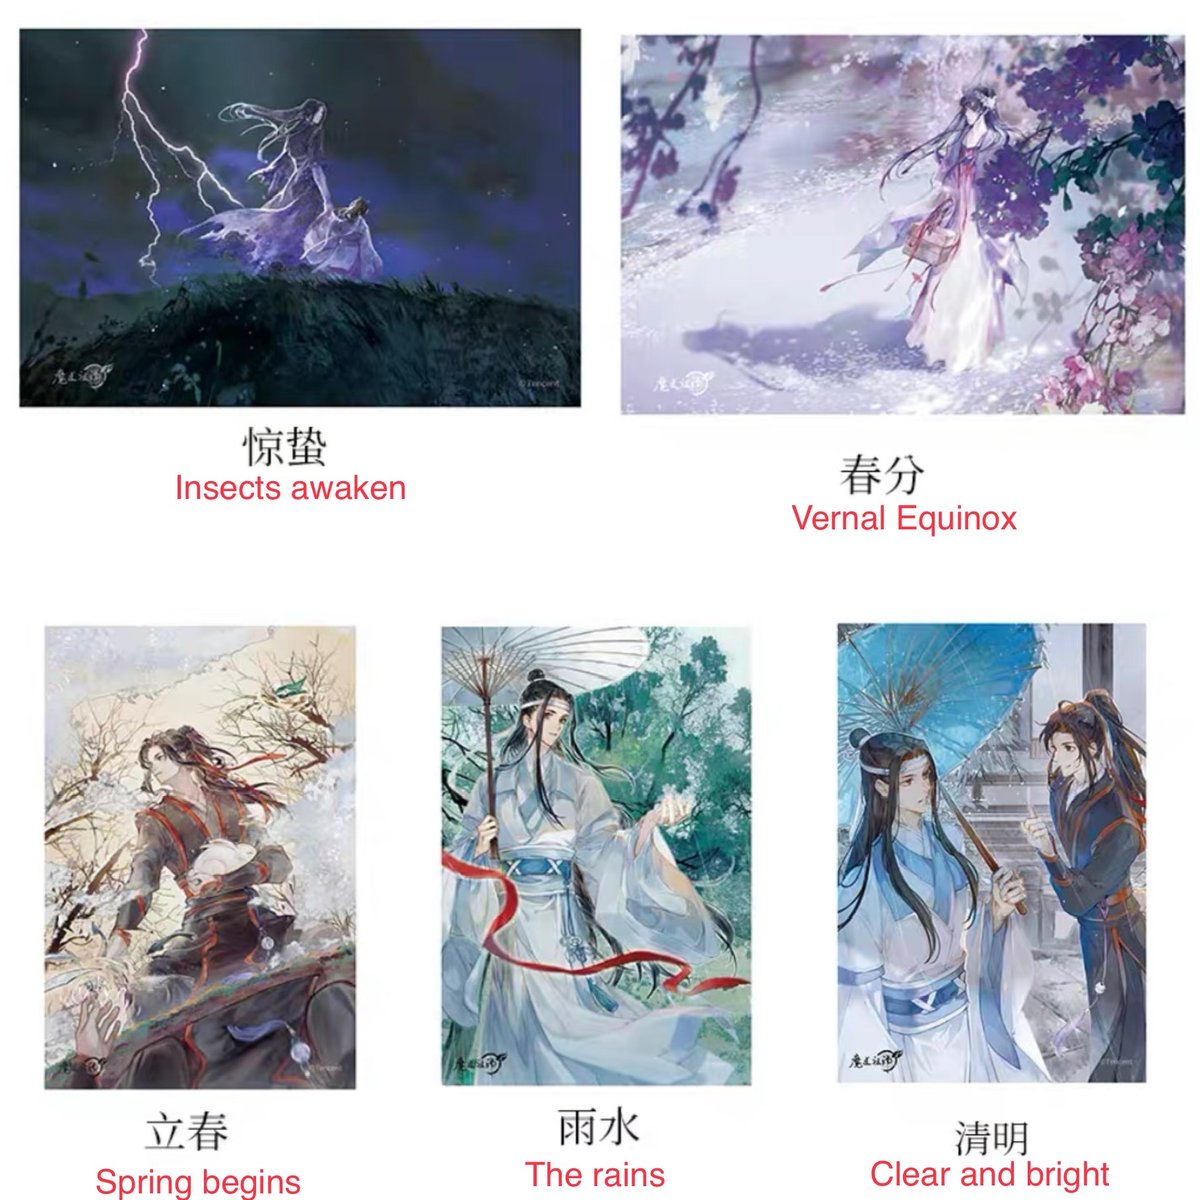 10Pcs/Set Anime Mo Dao Zu Shi Crystal Card Sticker HD Photocard Lomo Cards  Waterproof Bus Card Bank Card Fans Gift Collection